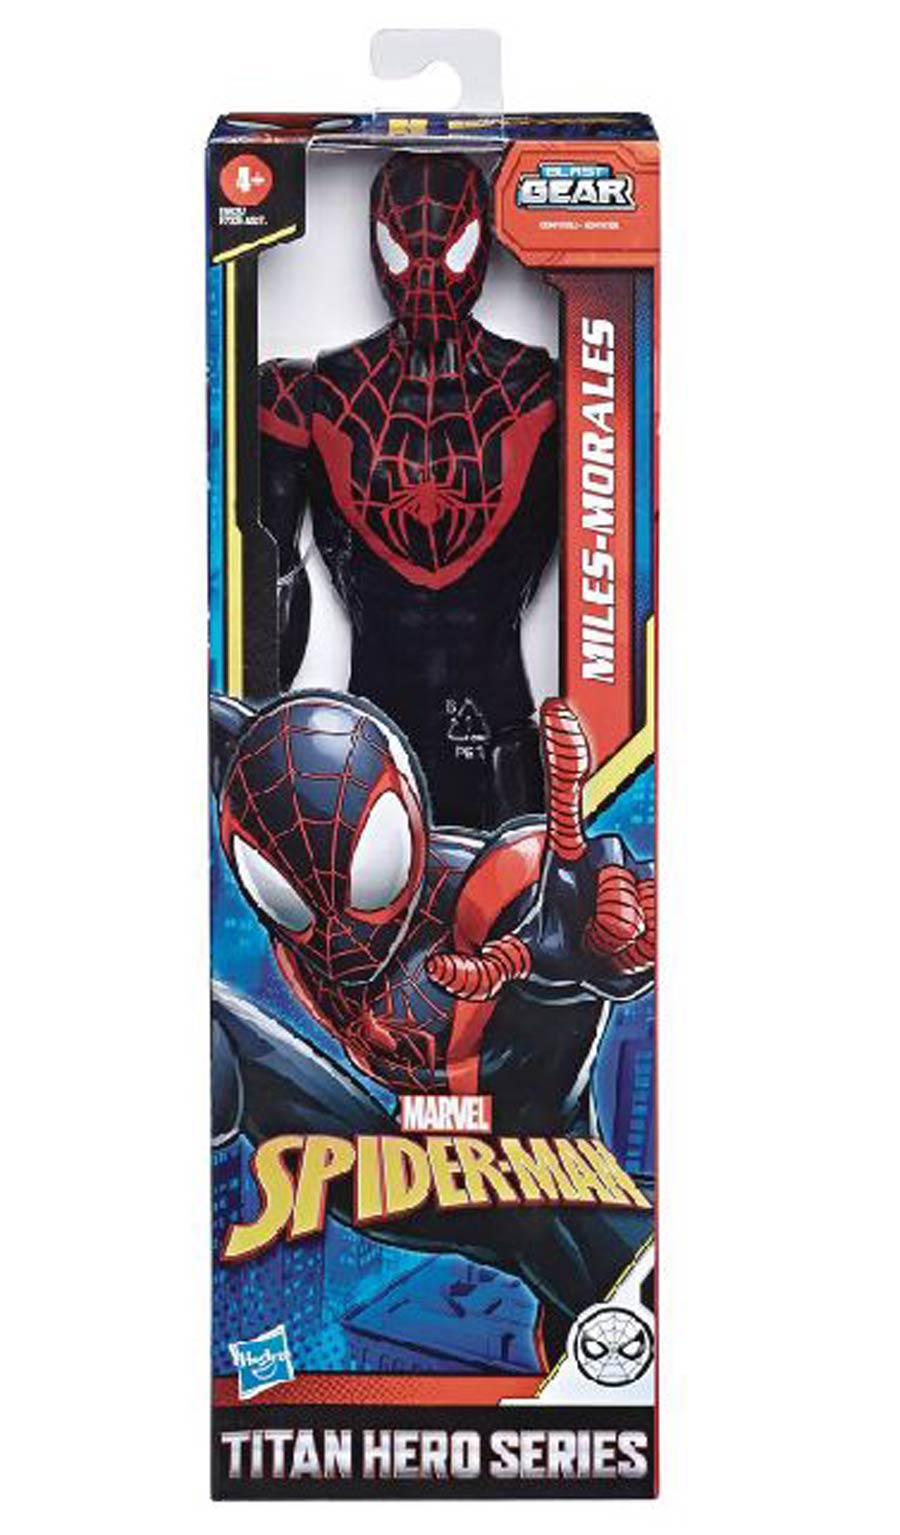 Spider-Man Titan Hero Web Warriors 12-Inch Action Figure 202001 - Miles Morales